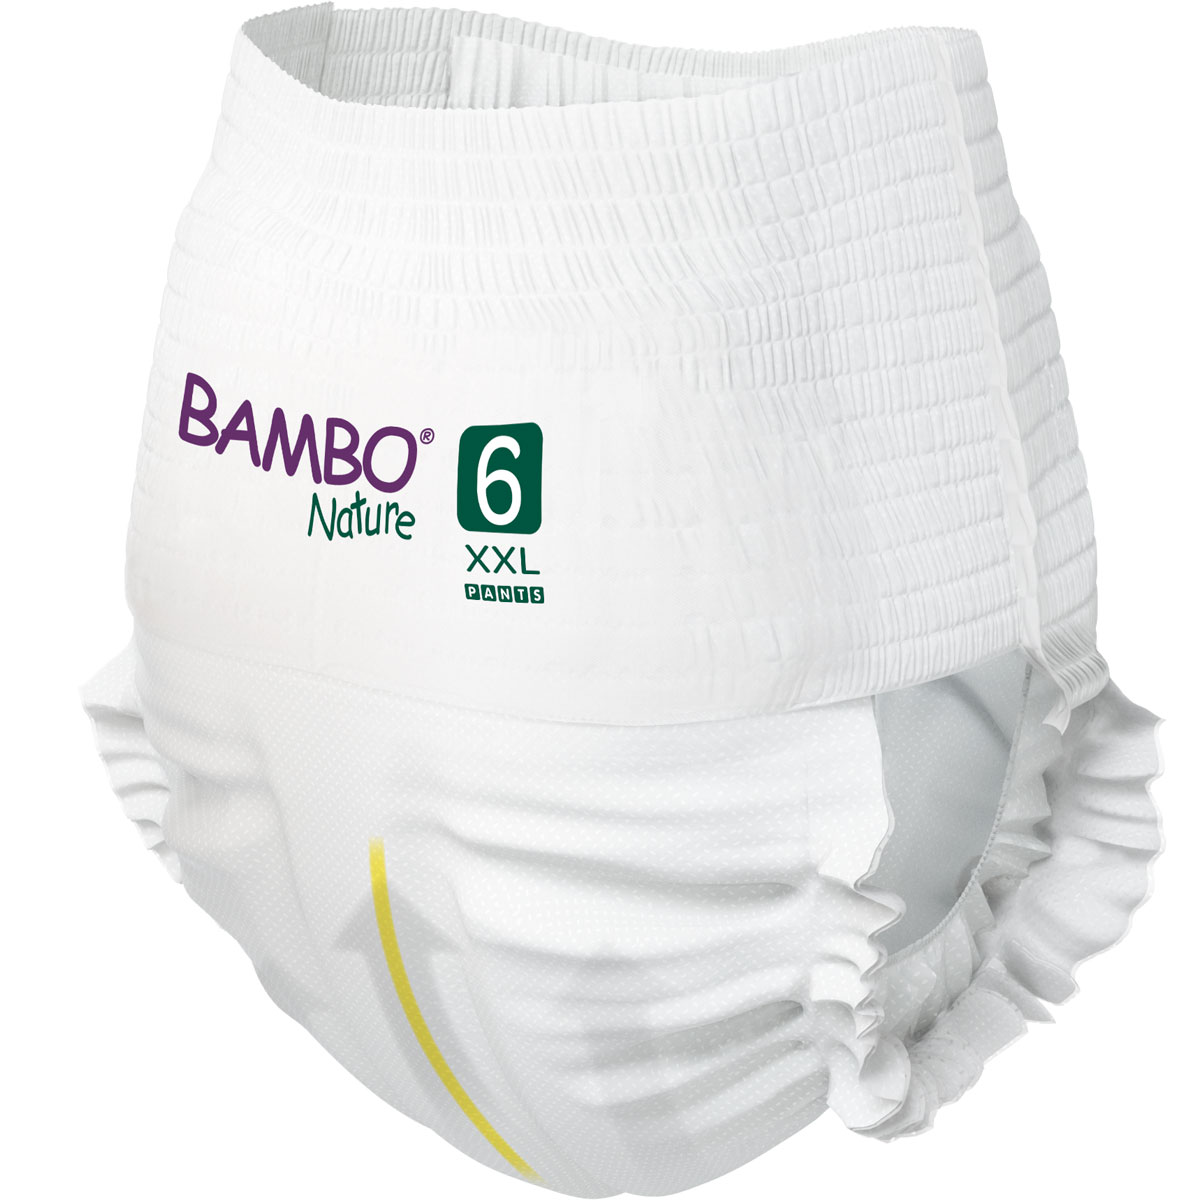 Bambo NATURE - Training Pants X-Large (18 St. Einzelpack)